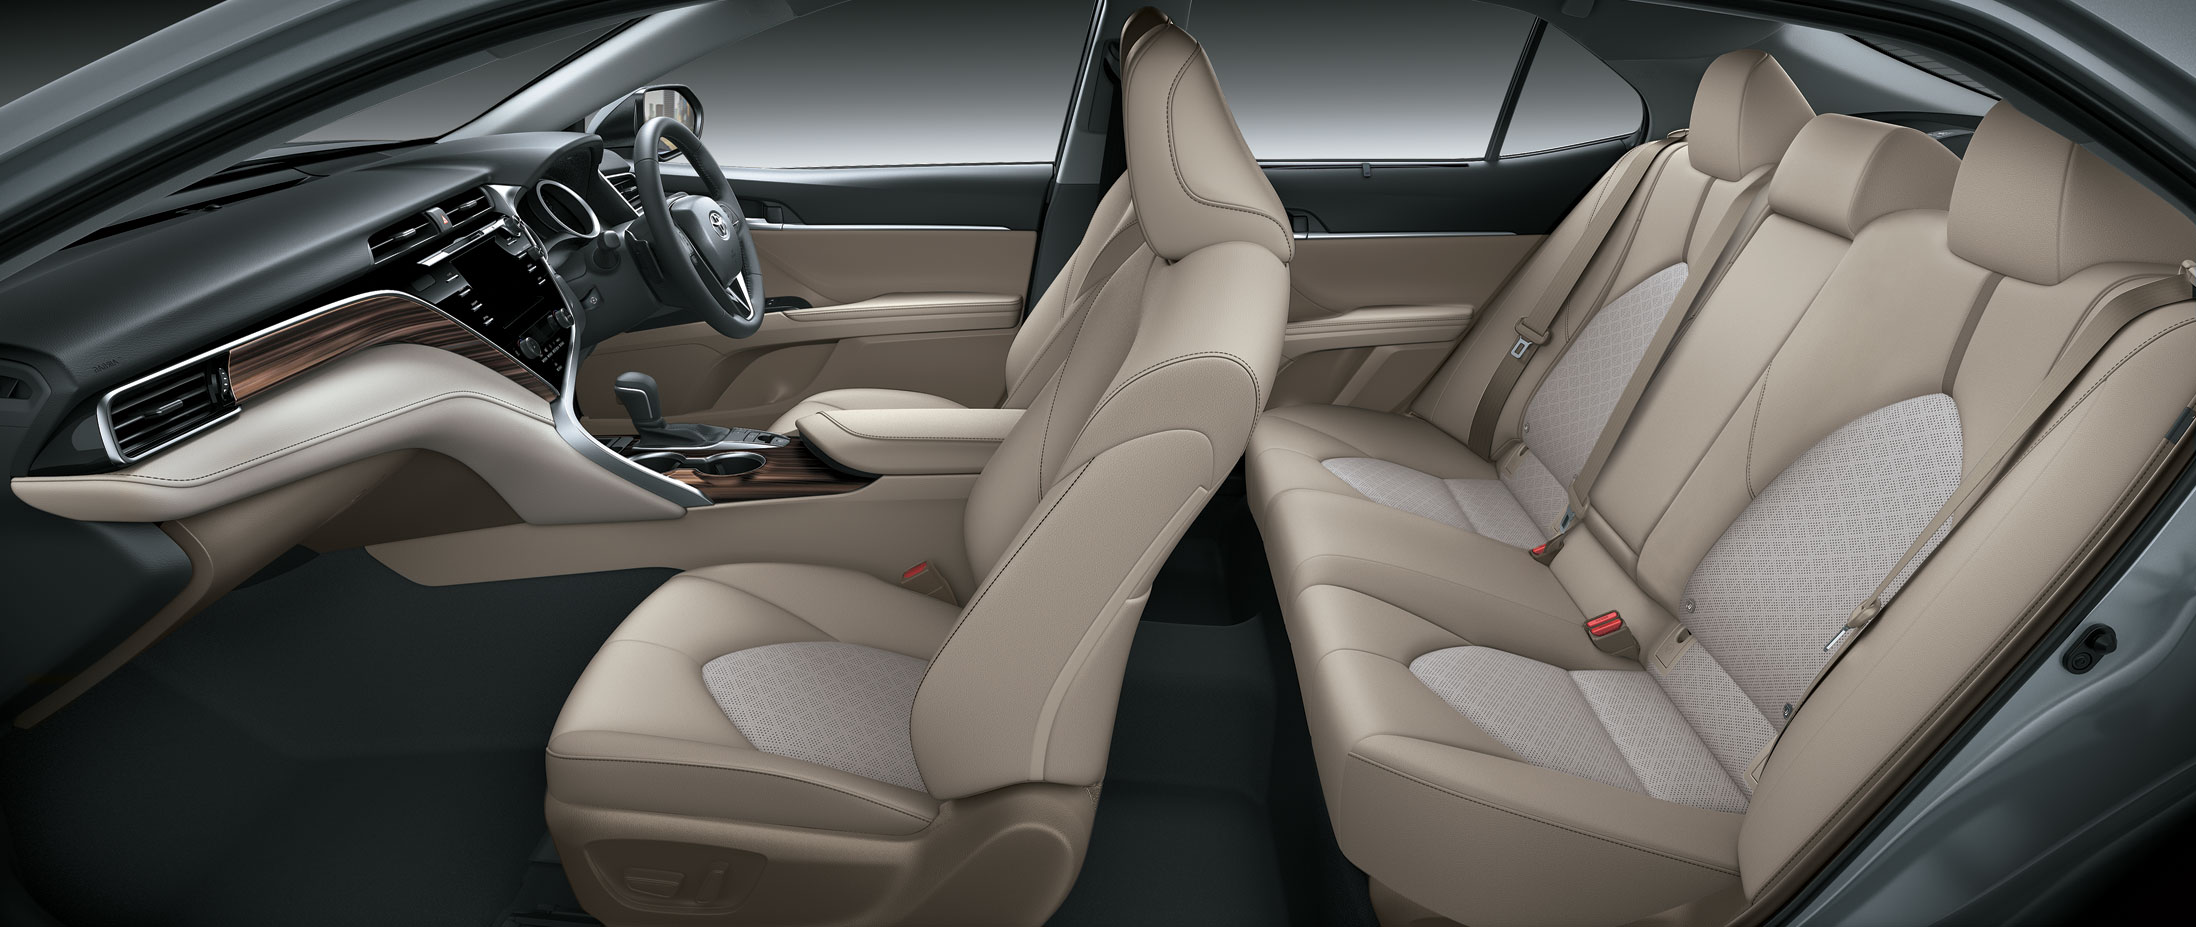 Toyota Camry 2022 interior